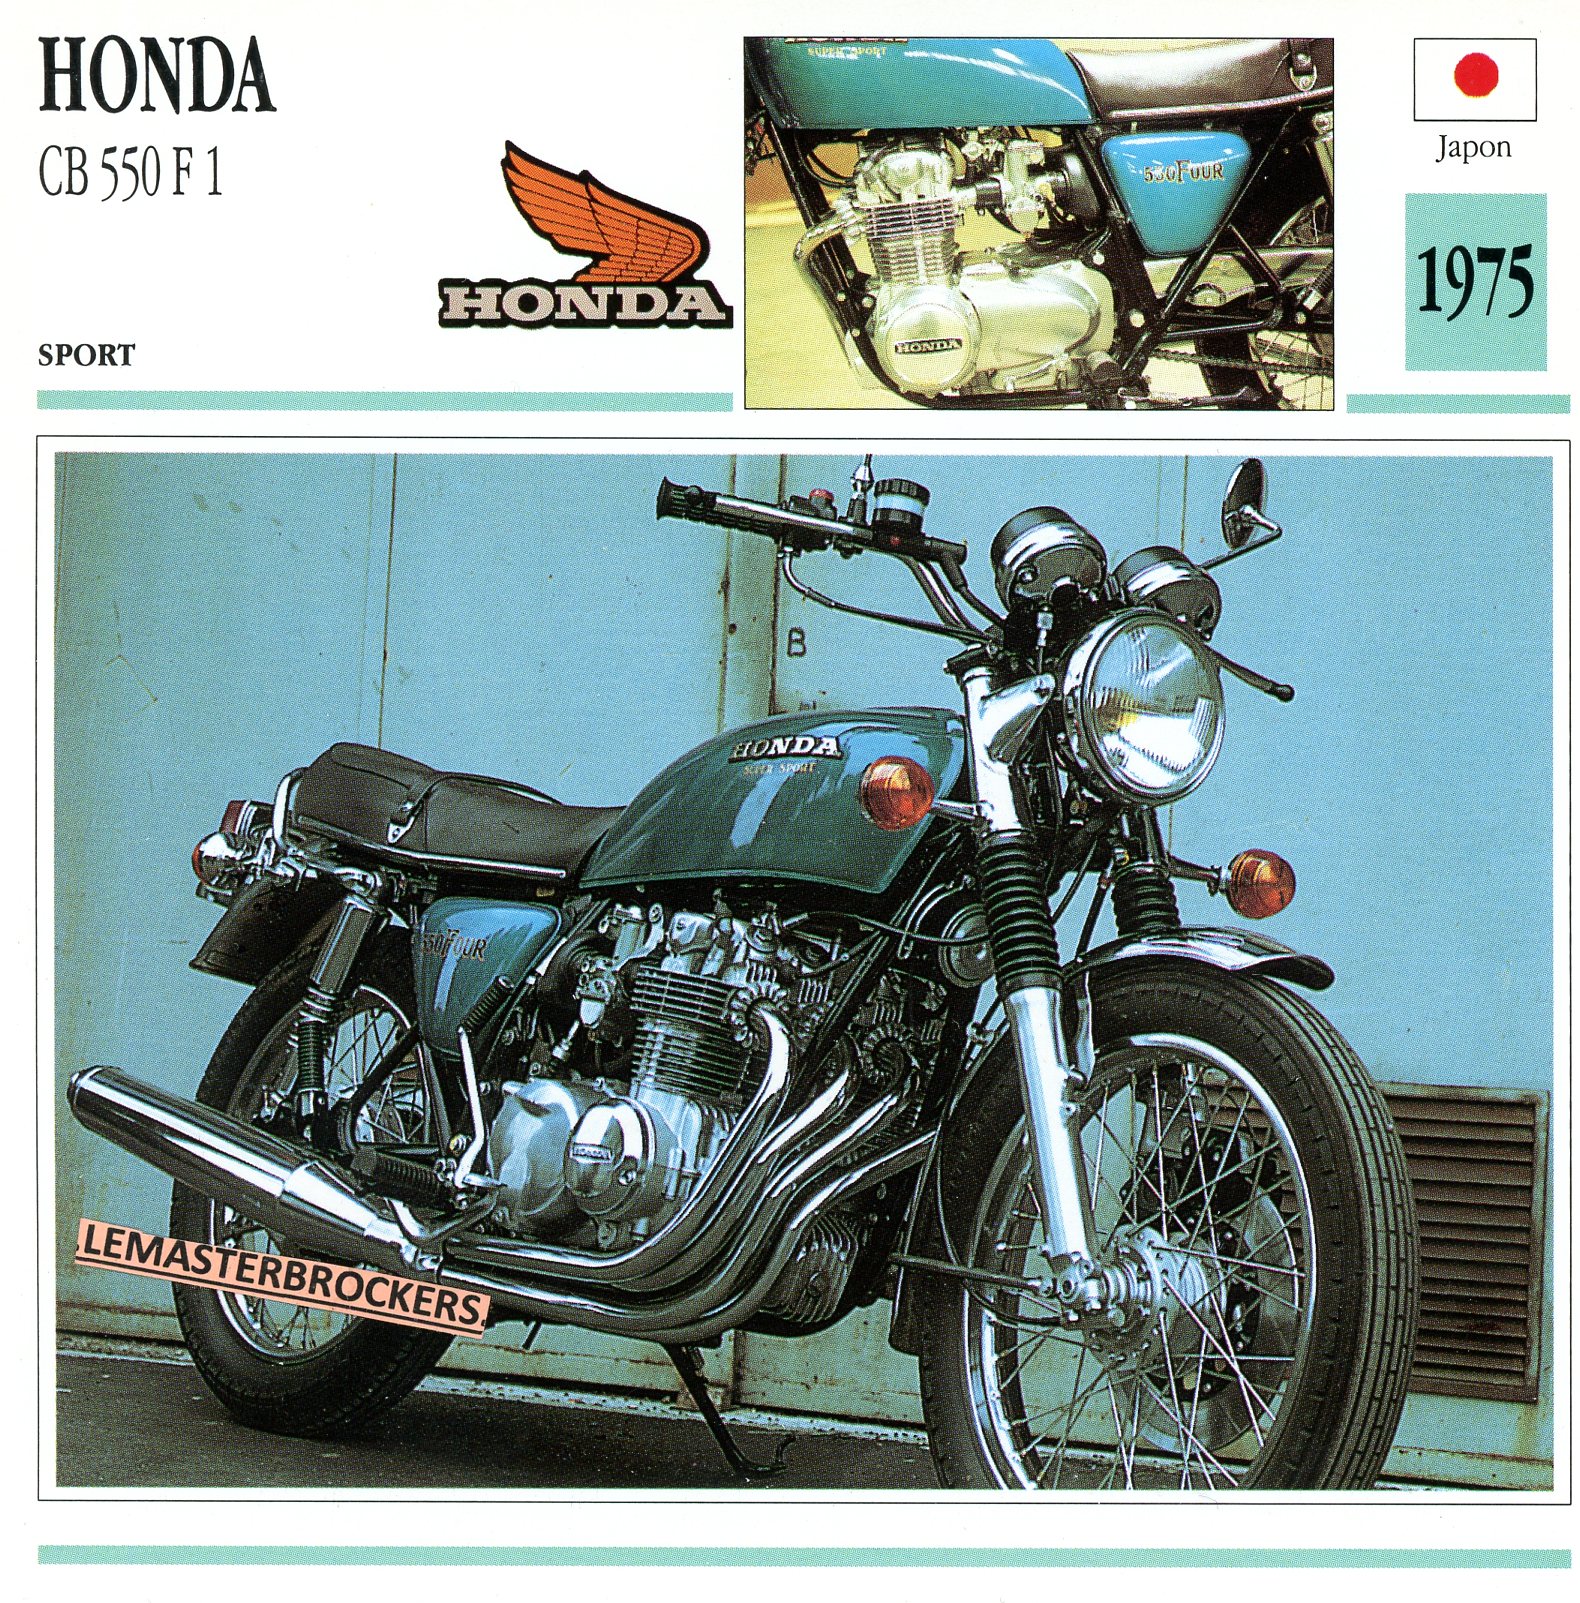 FICHE-MOTO-HONDA-CB550-1975-LEMASTERBROCKERS-CARS-MOTORCYCLE